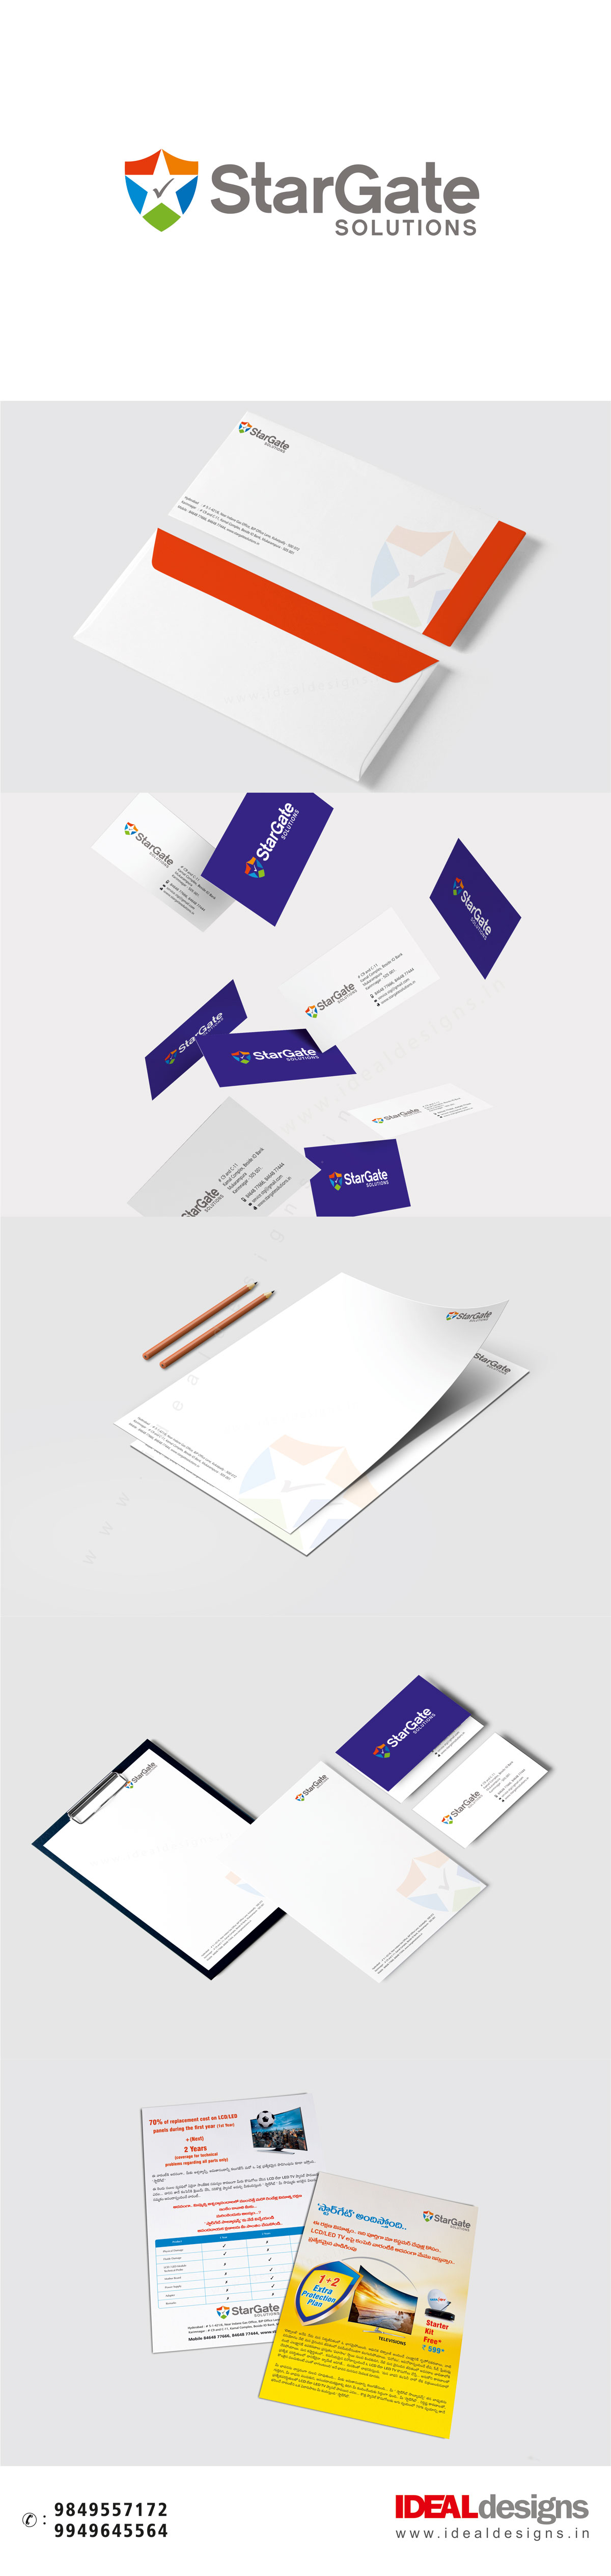 Professional-Designers-Logo-Design-CompanyWeb-Developers-India-Web-Designers-India-Best-Brochure-Design-Company-Offers-Brochure-Design-Services.jpg